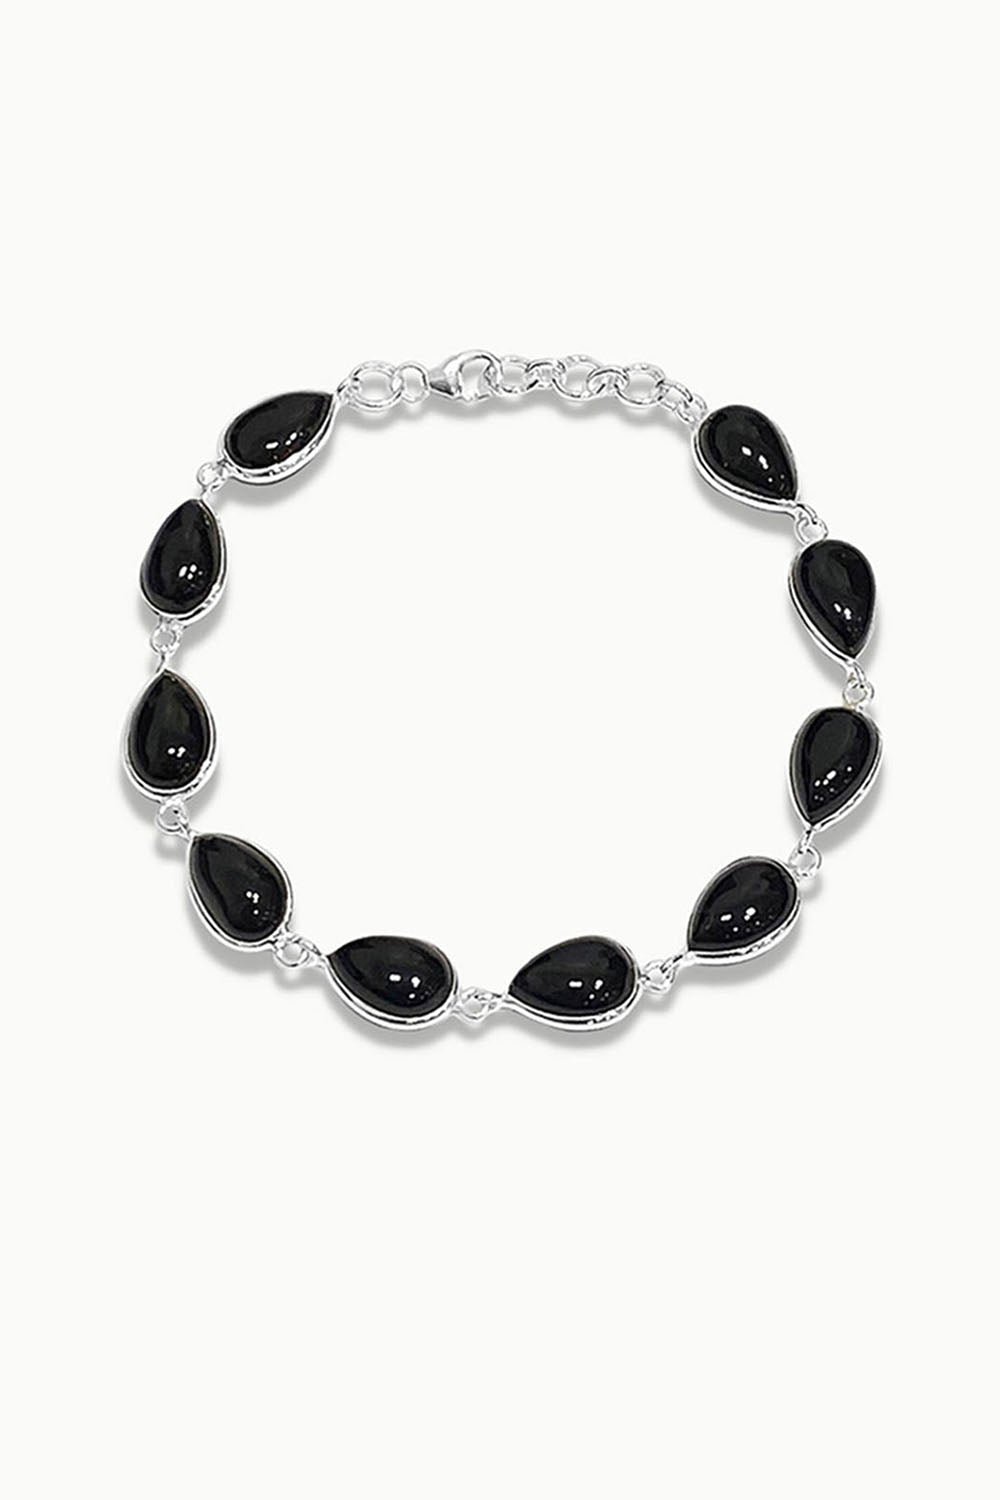 Black Onyx Silver Bracelet - Dew Drops